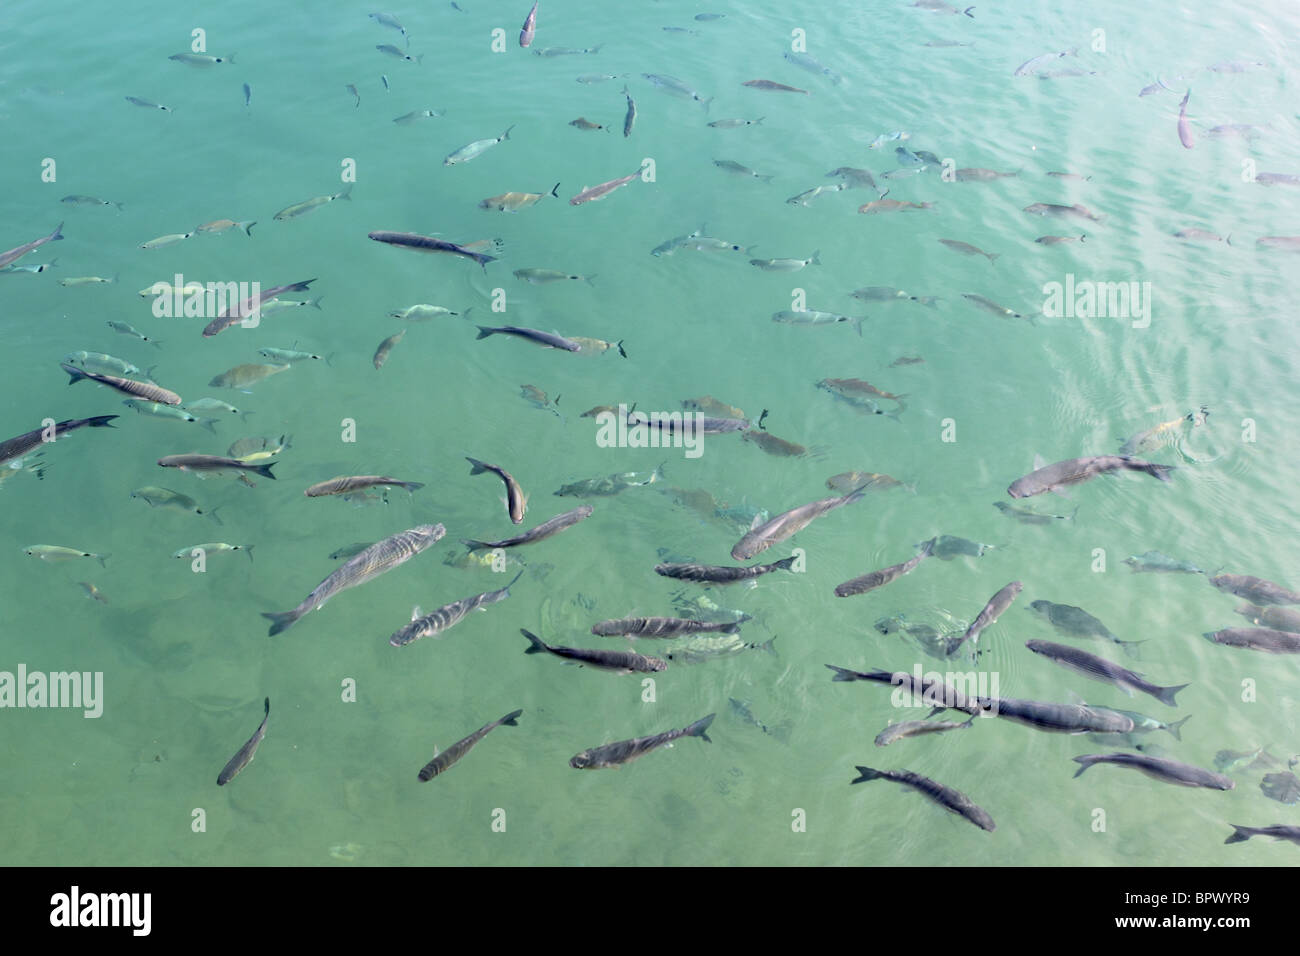 fishes mullet school in mediterranean port saltwater Stock Photo